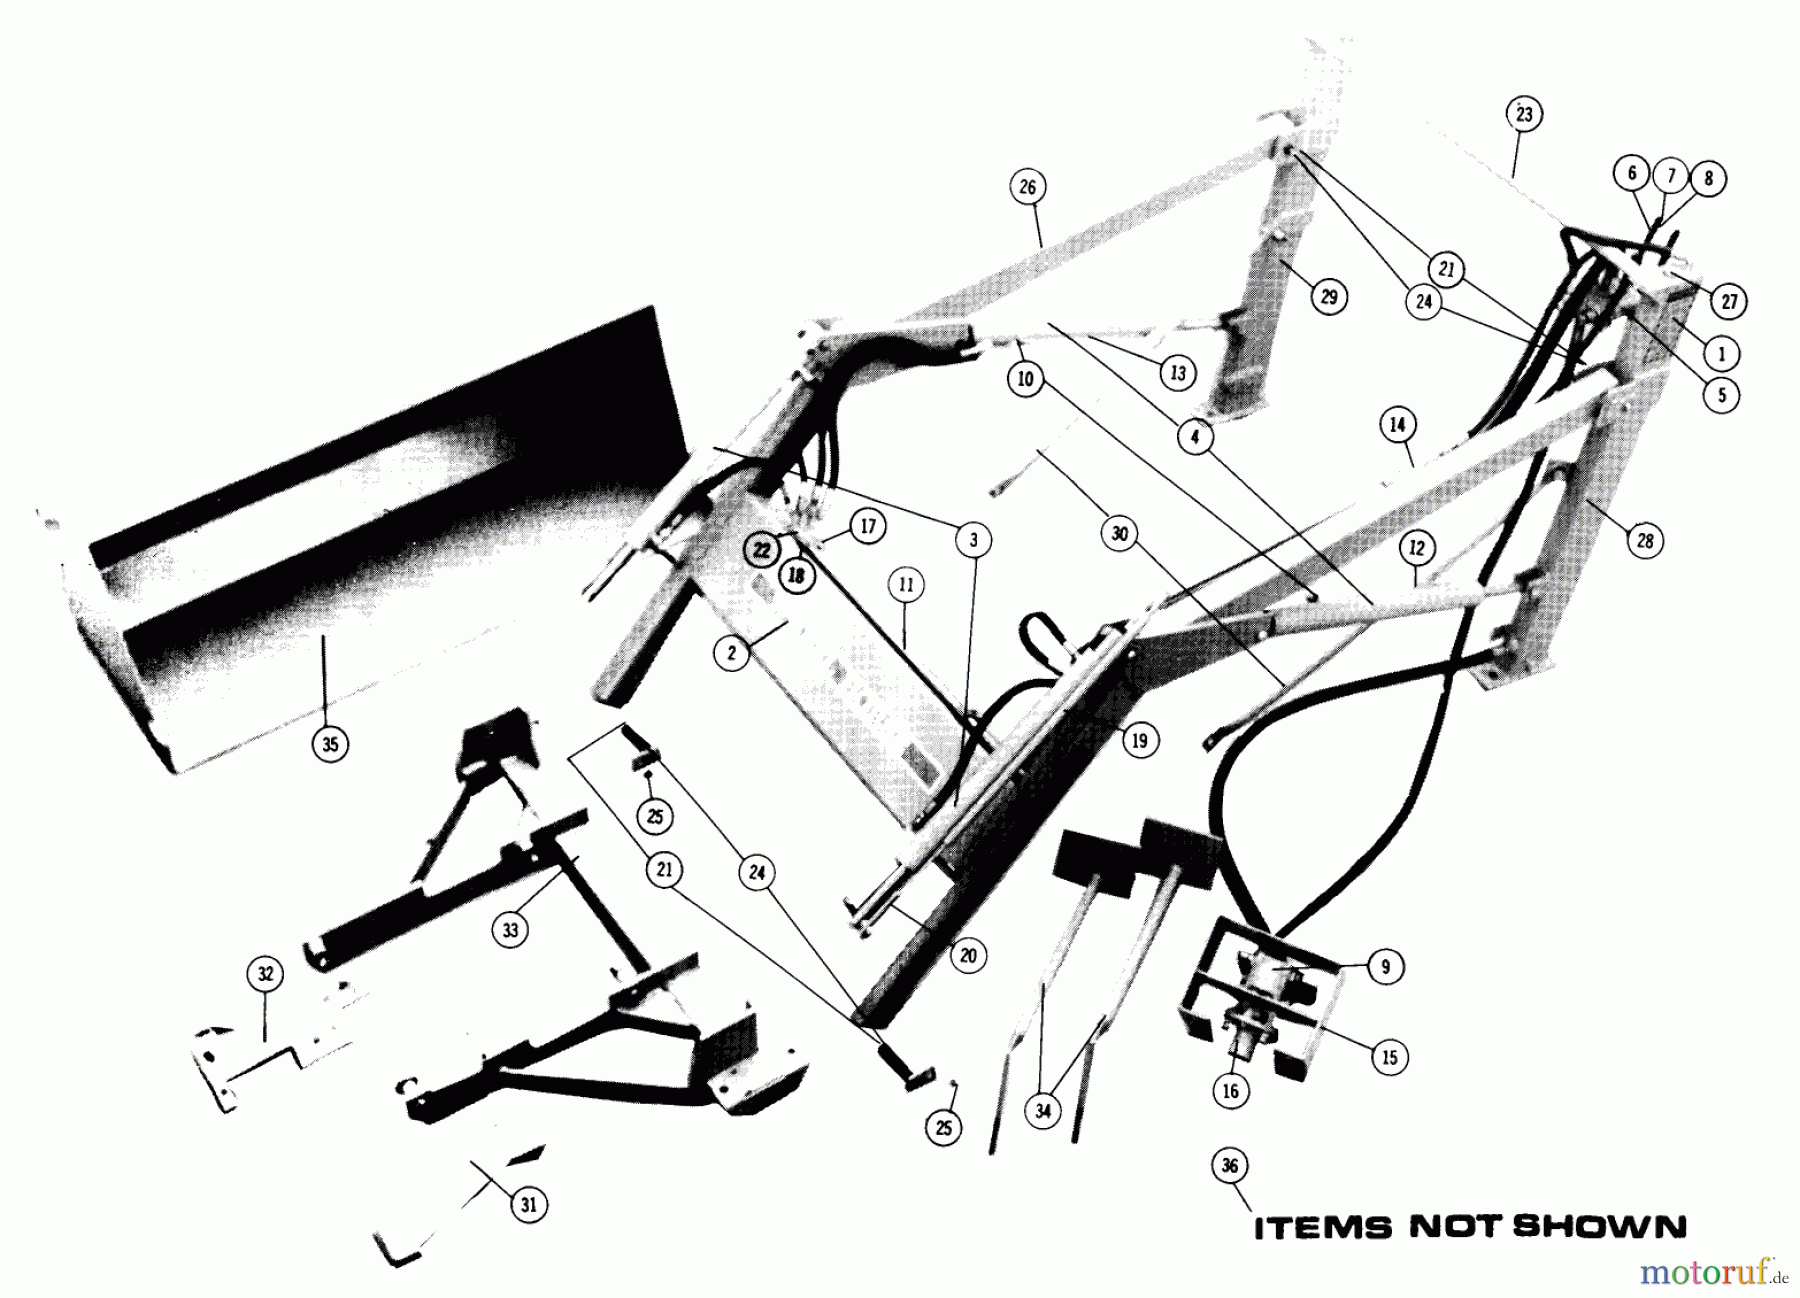  Toro Neu Accessories 87-72FL01 - Toro Loader Frame, 1979 PARTS LIST FOR FRONT LOADER VEHICLE IDENTIFICATION NUMBERS 87-72FL01/87-48BK01